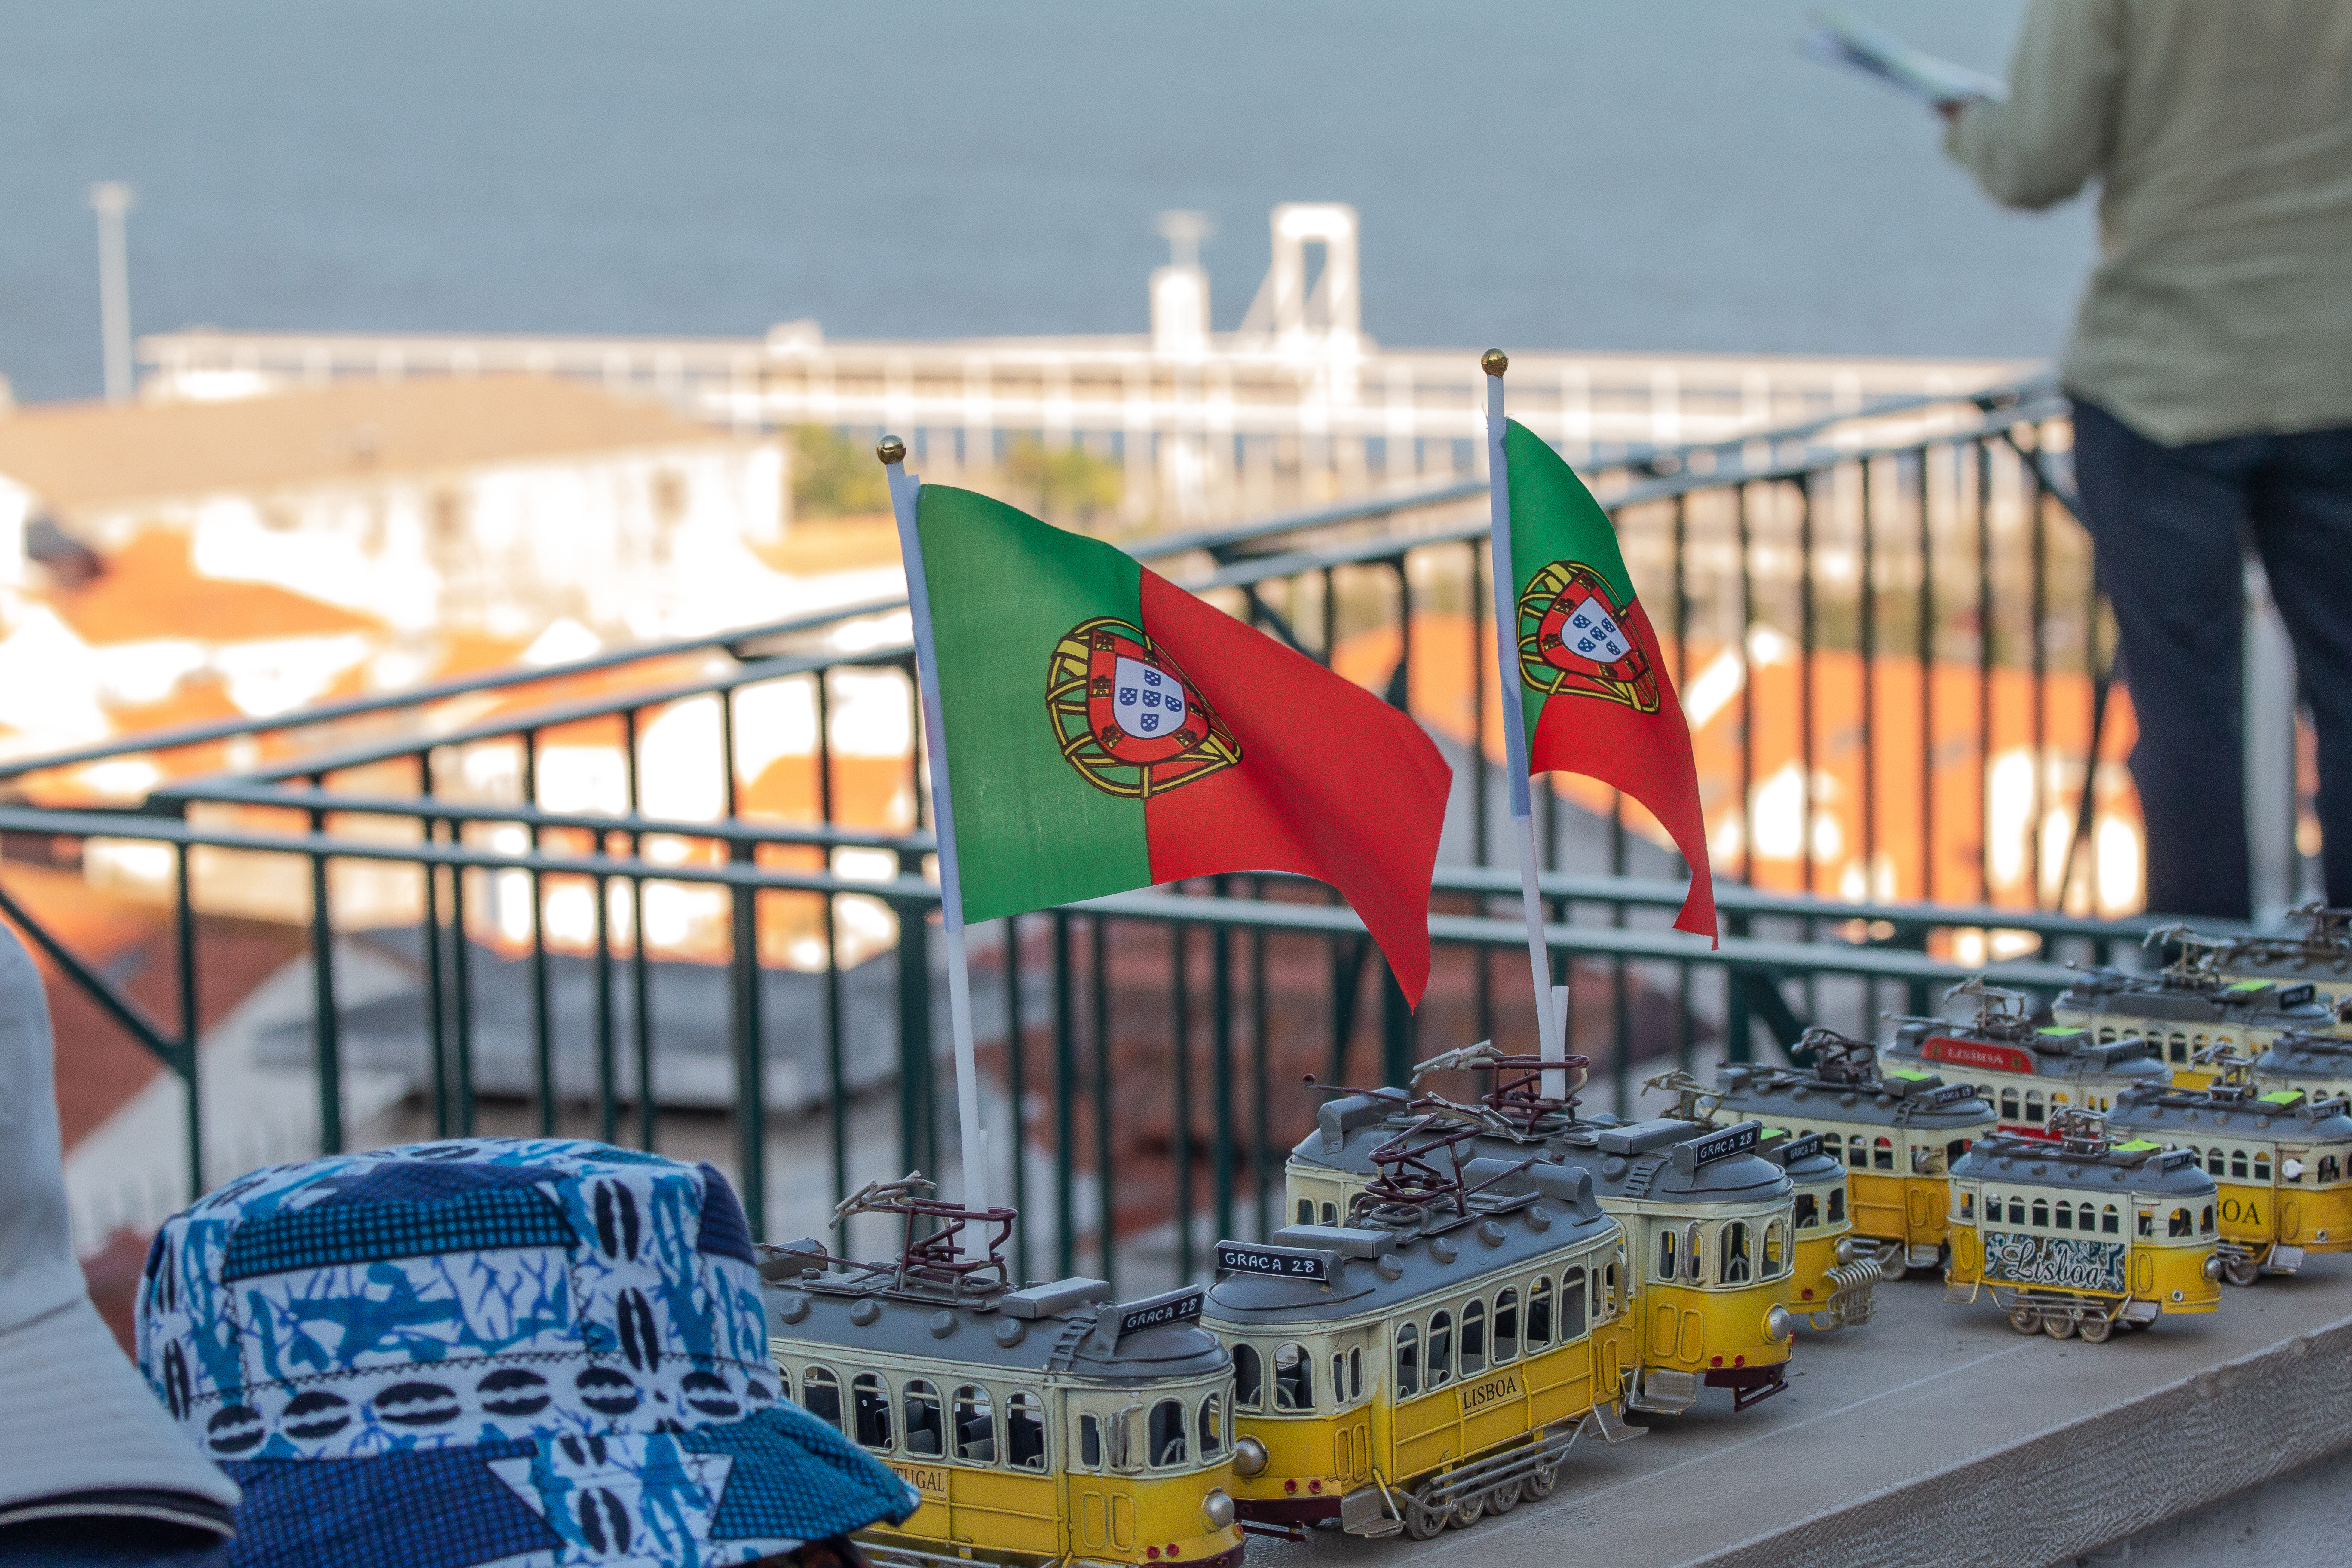 Lisbon tram miniatures and Portuguese flag - Miniaturas do eléctrico de Lisboa e bandeira Portuguesa